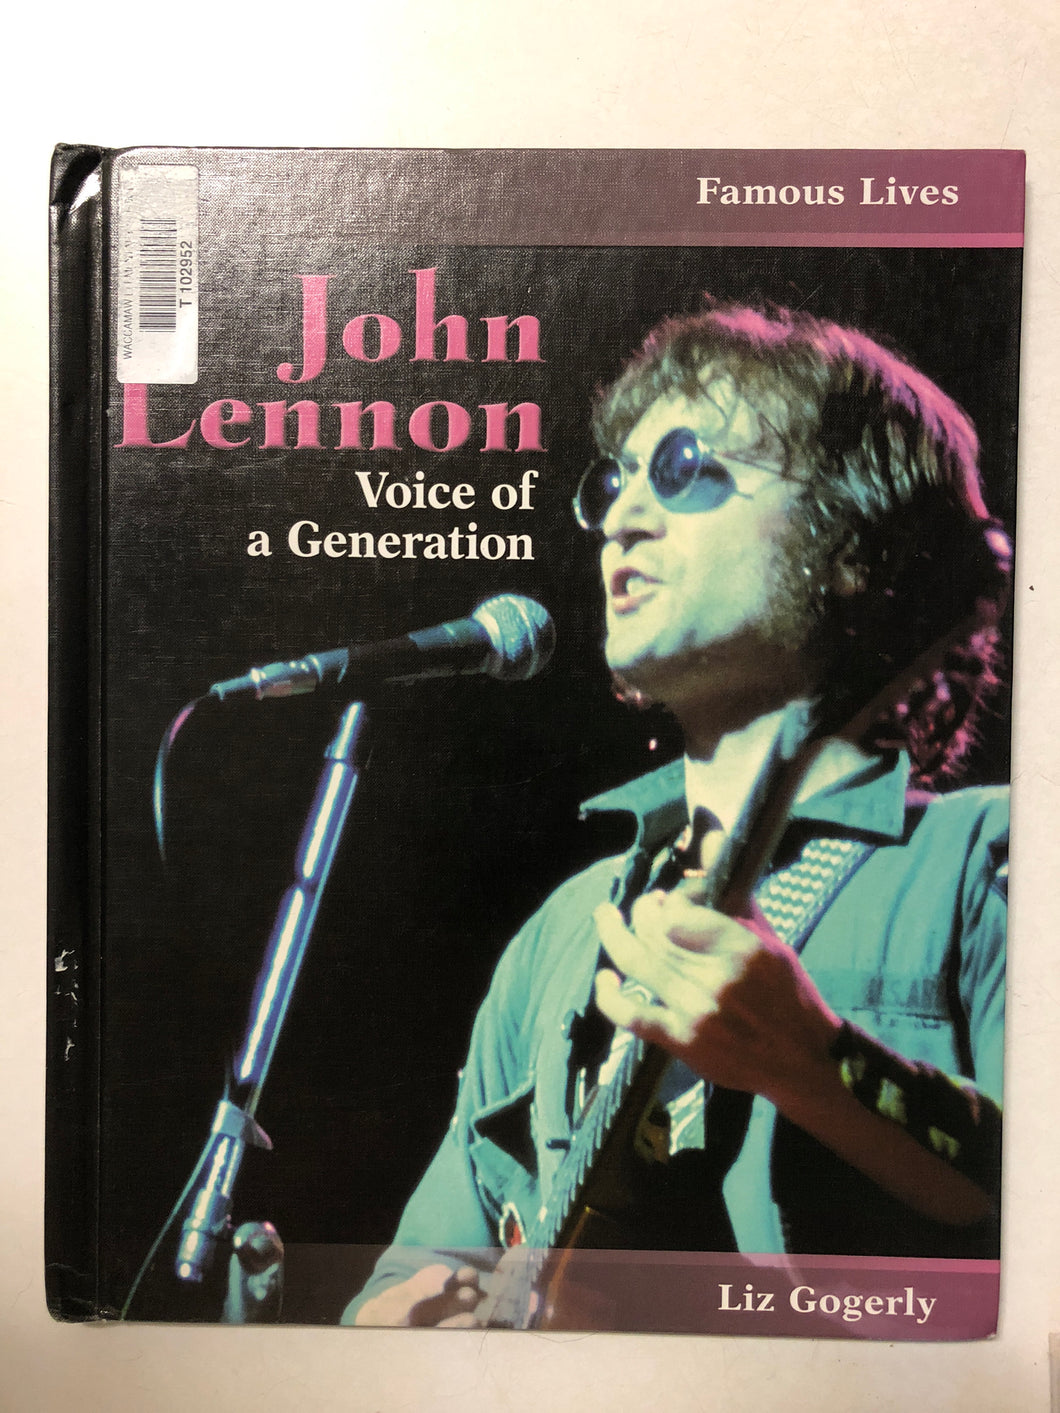 John Lennon Voice of a Generation - Slick Cat Books 